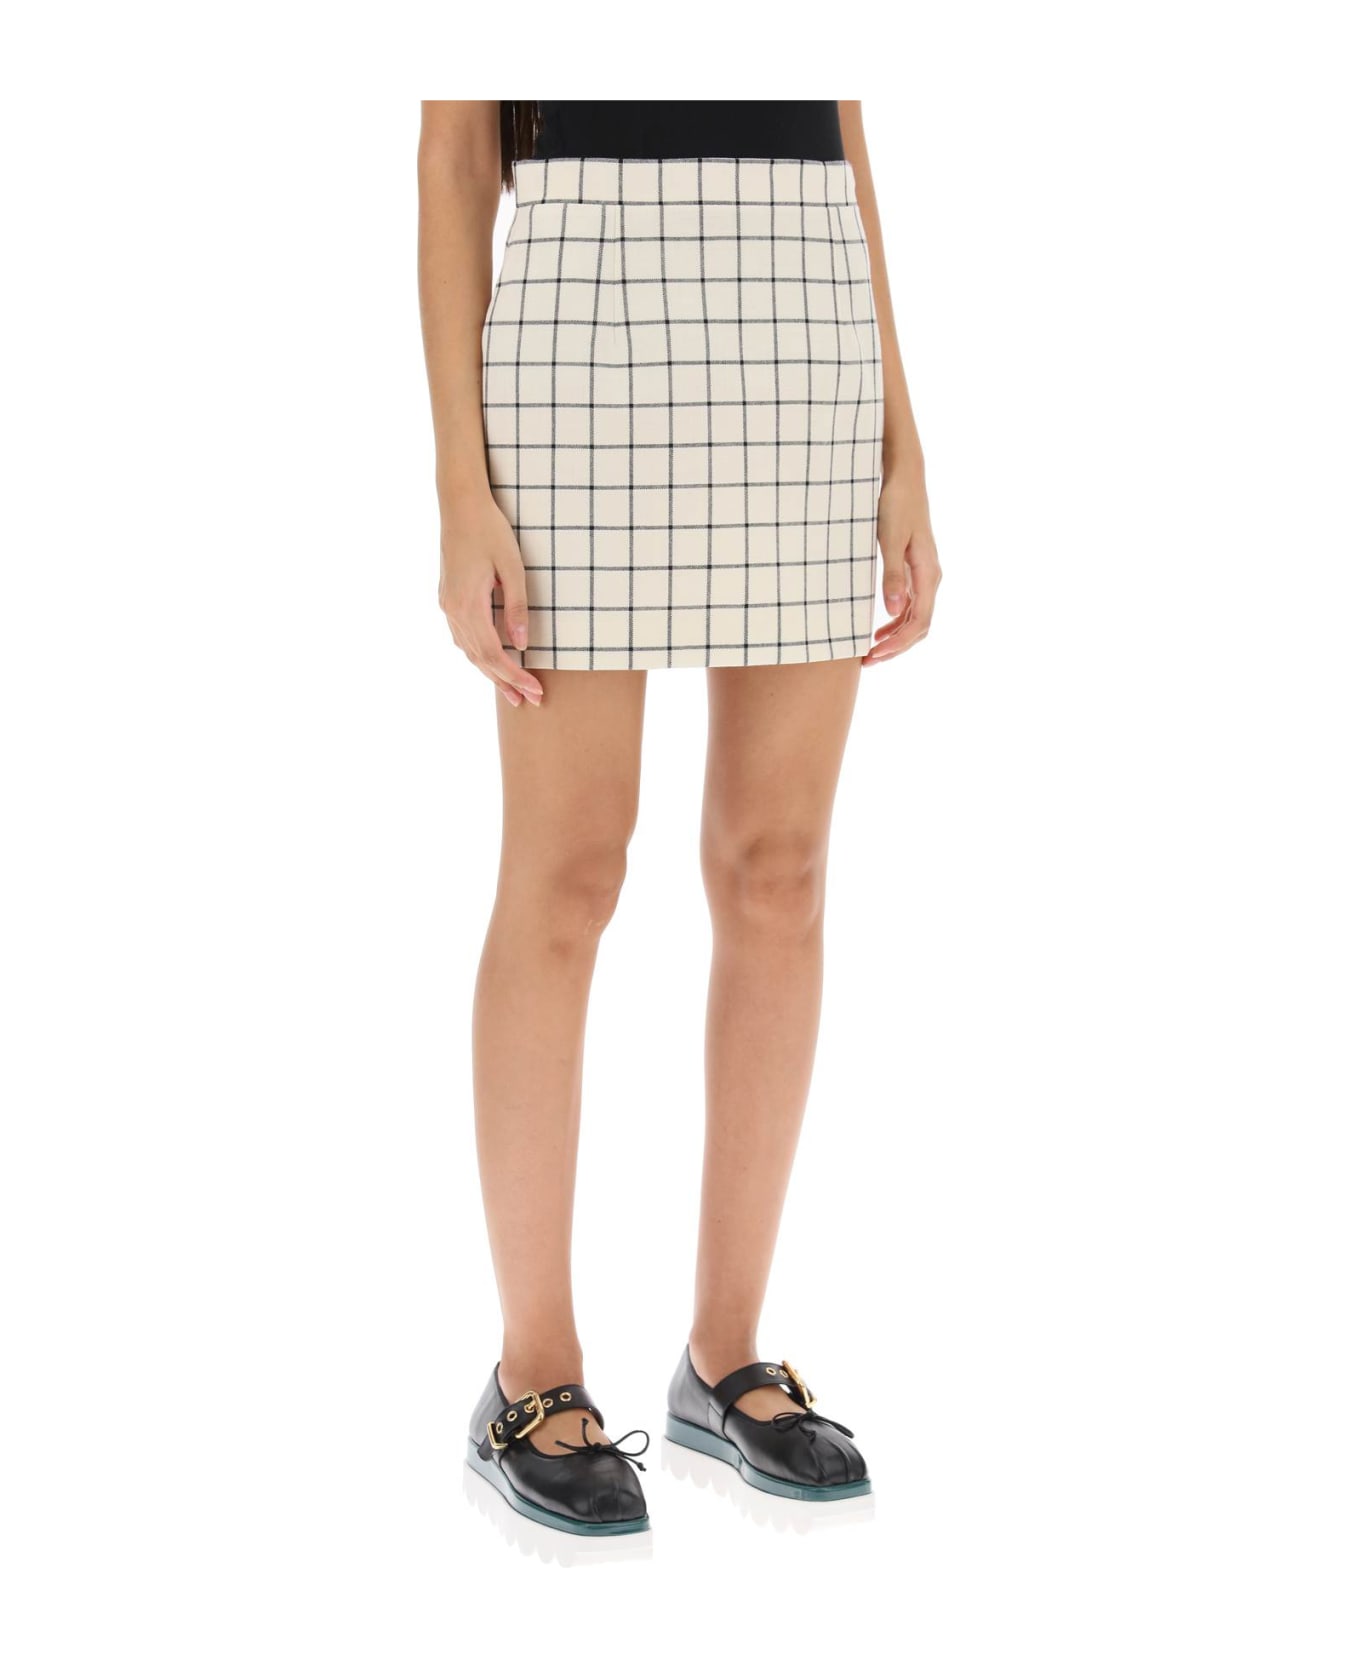 Marni Wool Check Skirt - Chw03 スカート